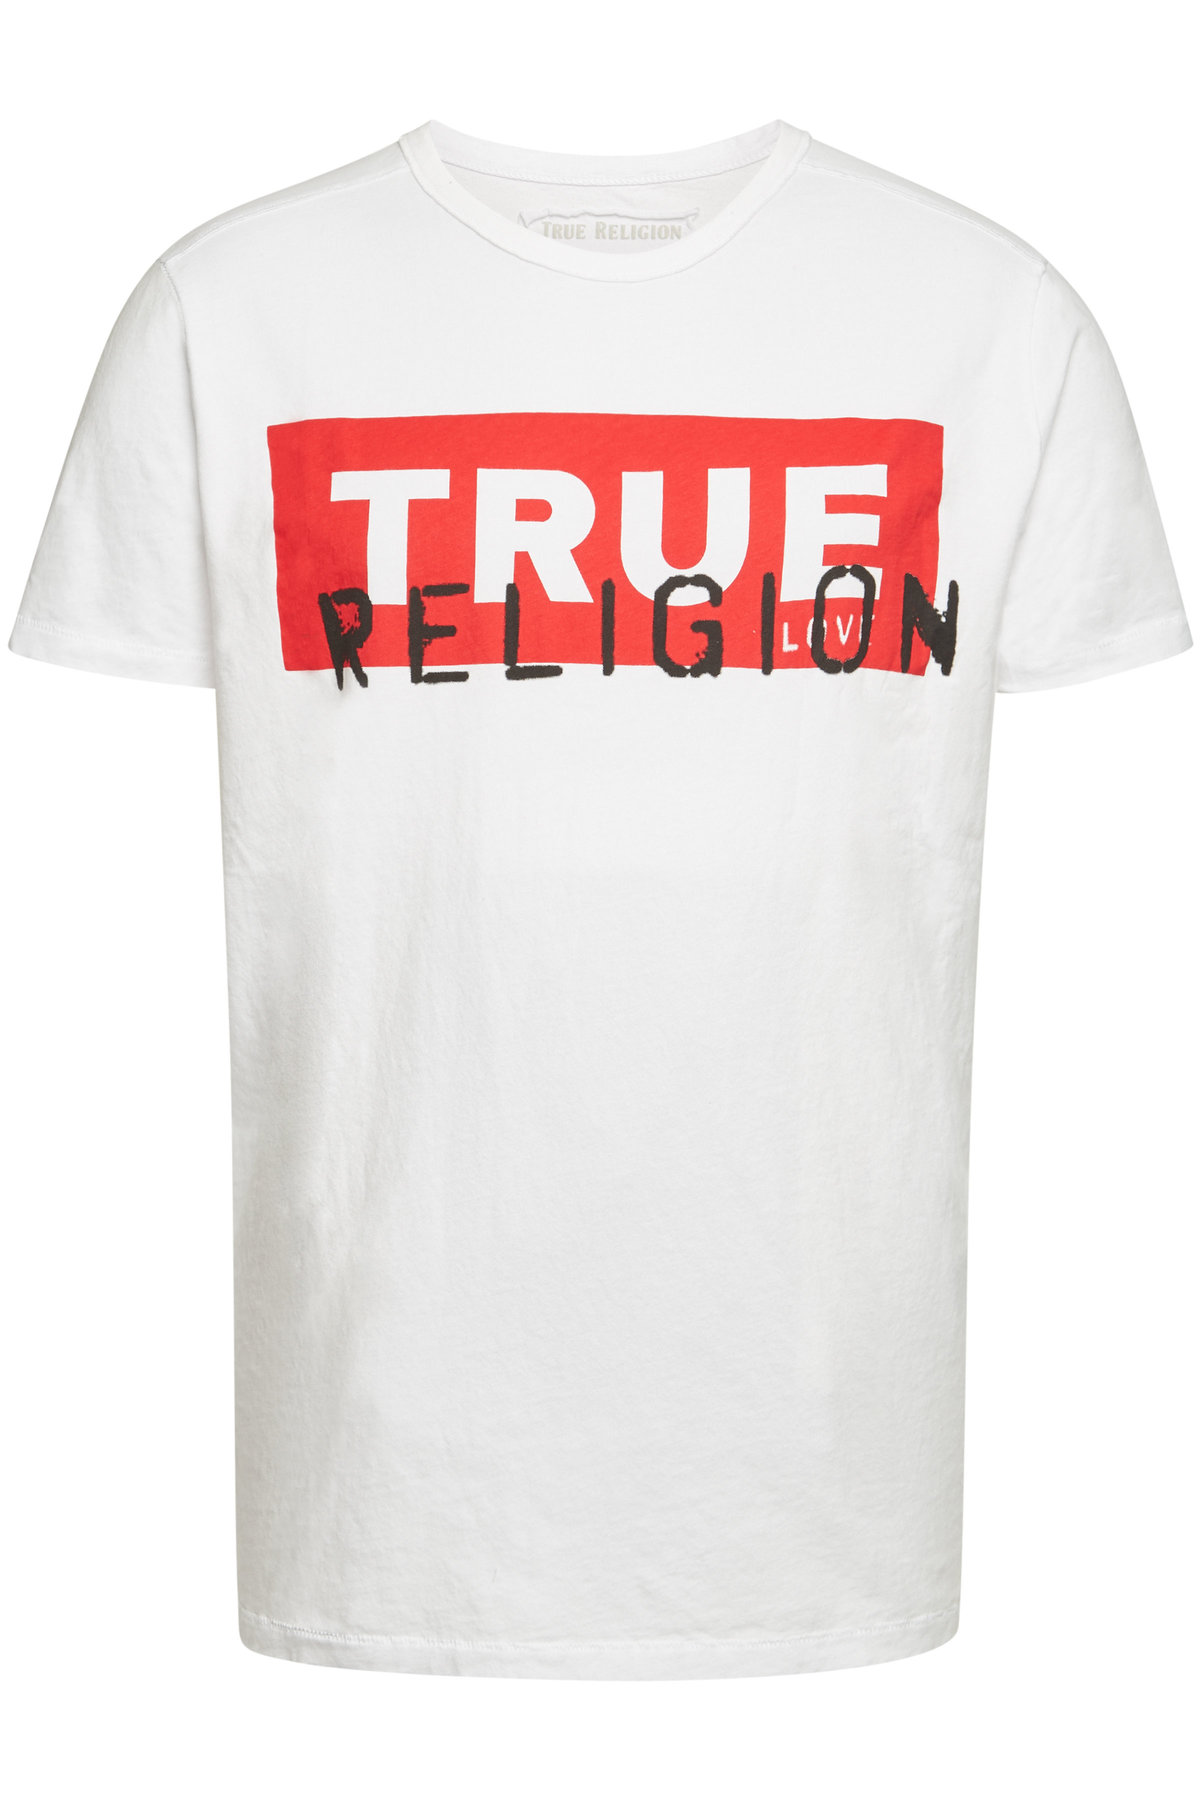 white red true religion shirt